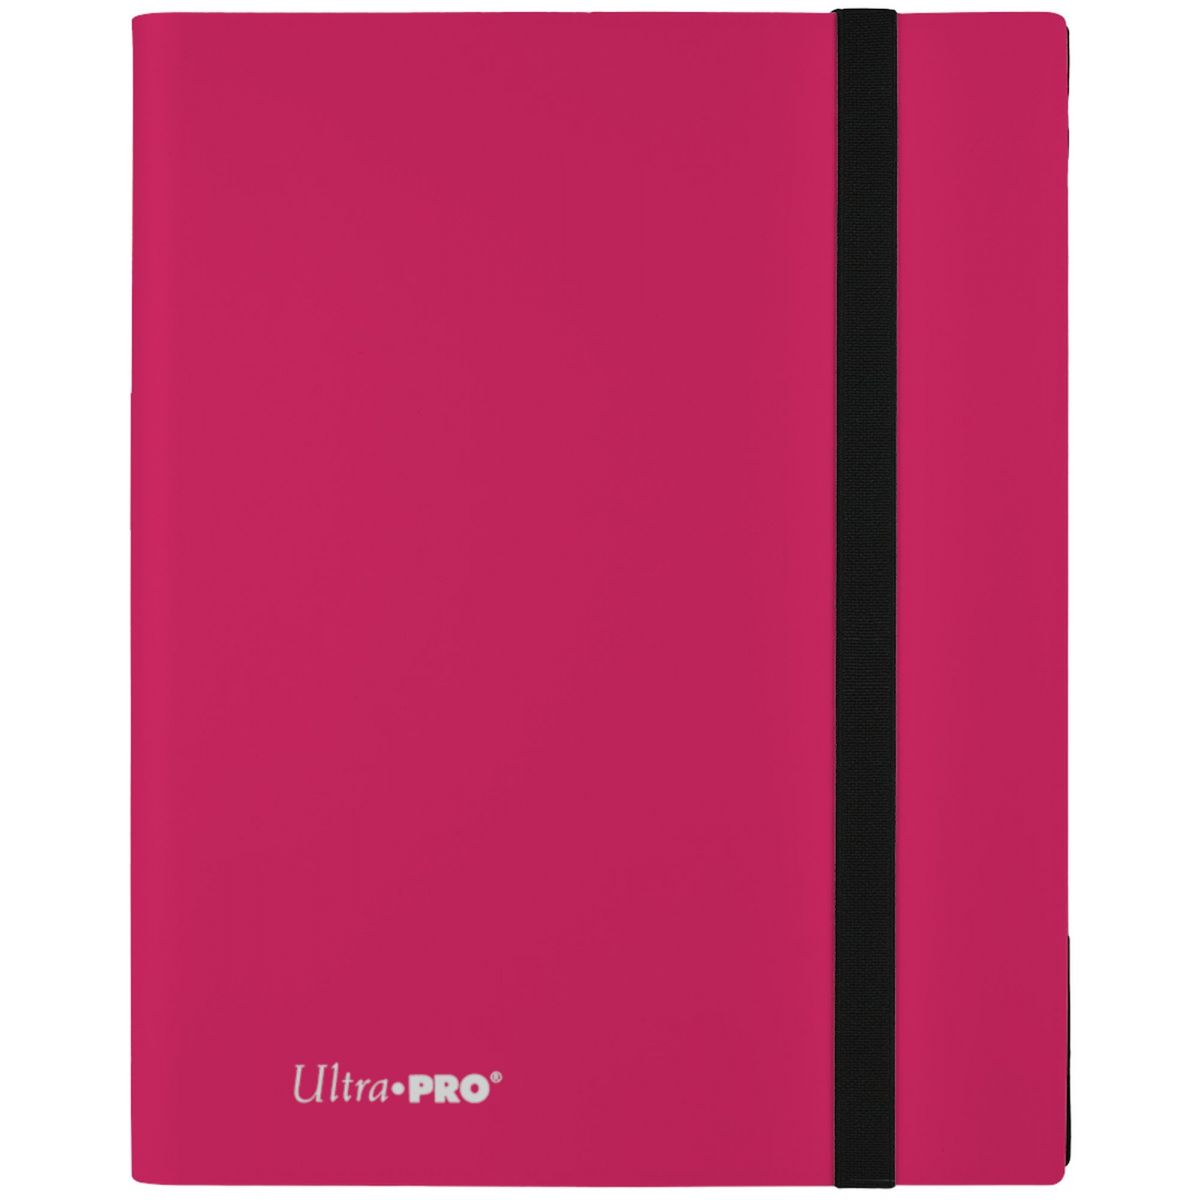 Ultra Pro - Pro Binder - Eclipse - 9 Cases - Hot Pink Rose Vif (360)